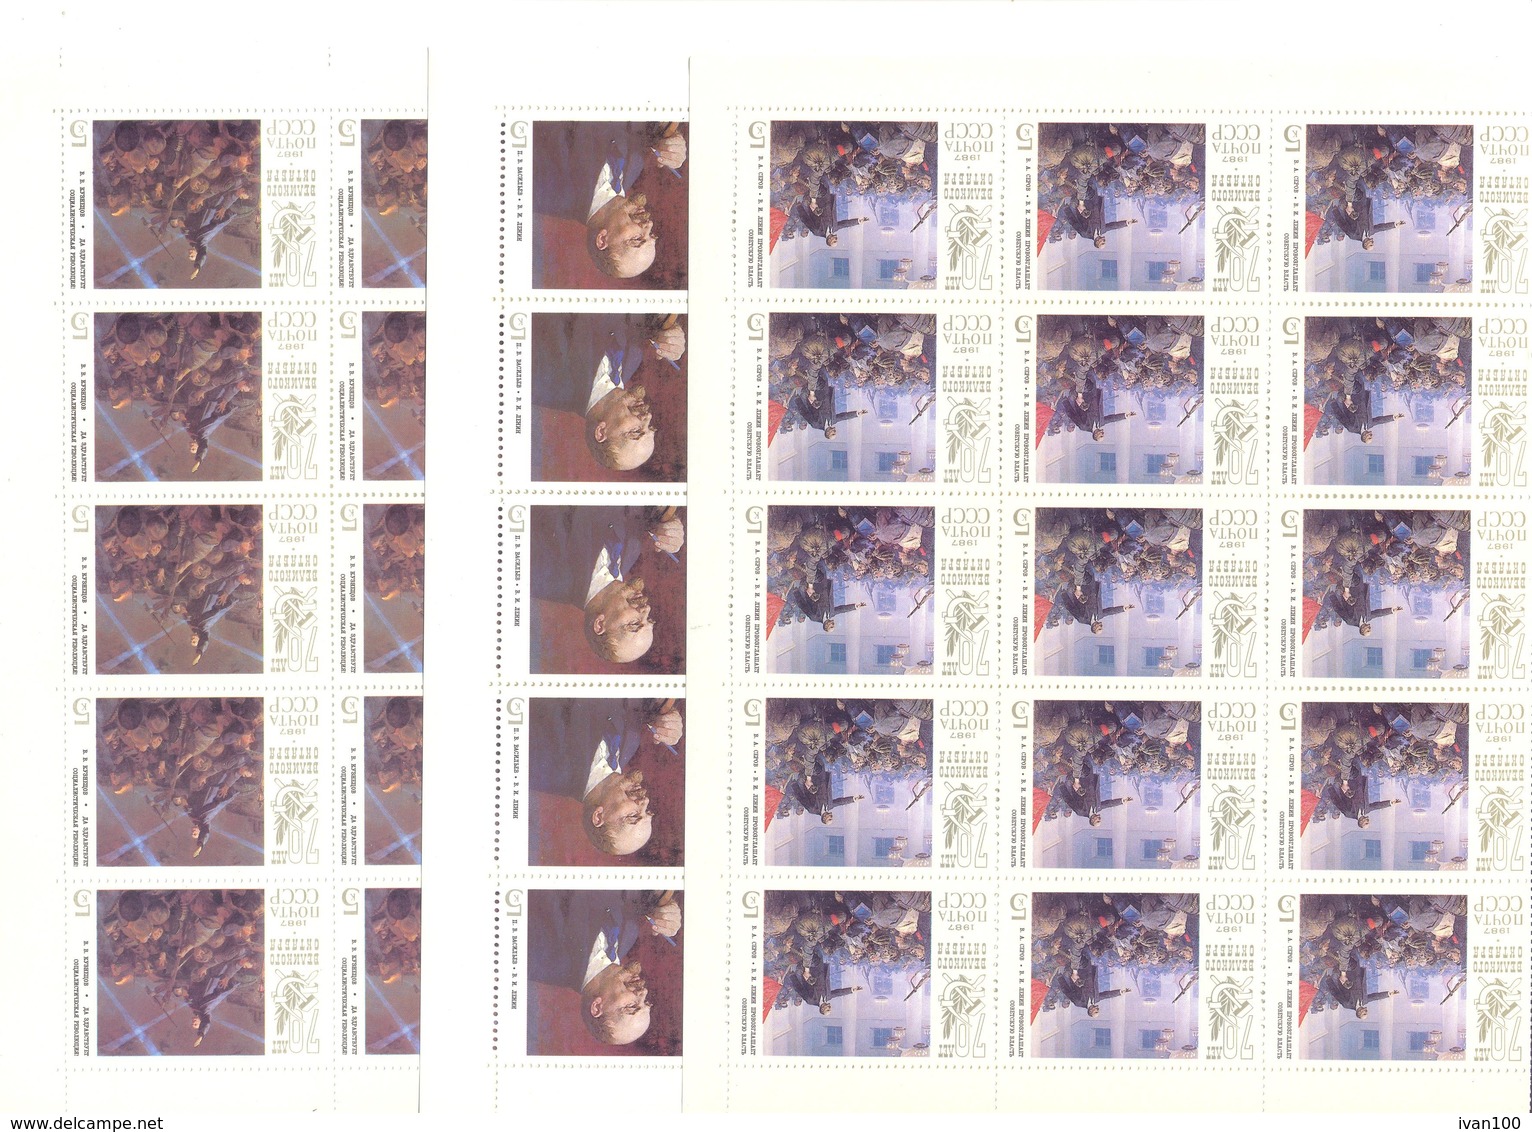 1987. USSR/Russia, complete year set, 4 sets in blocks of 4v each + sheetlets, mint/**